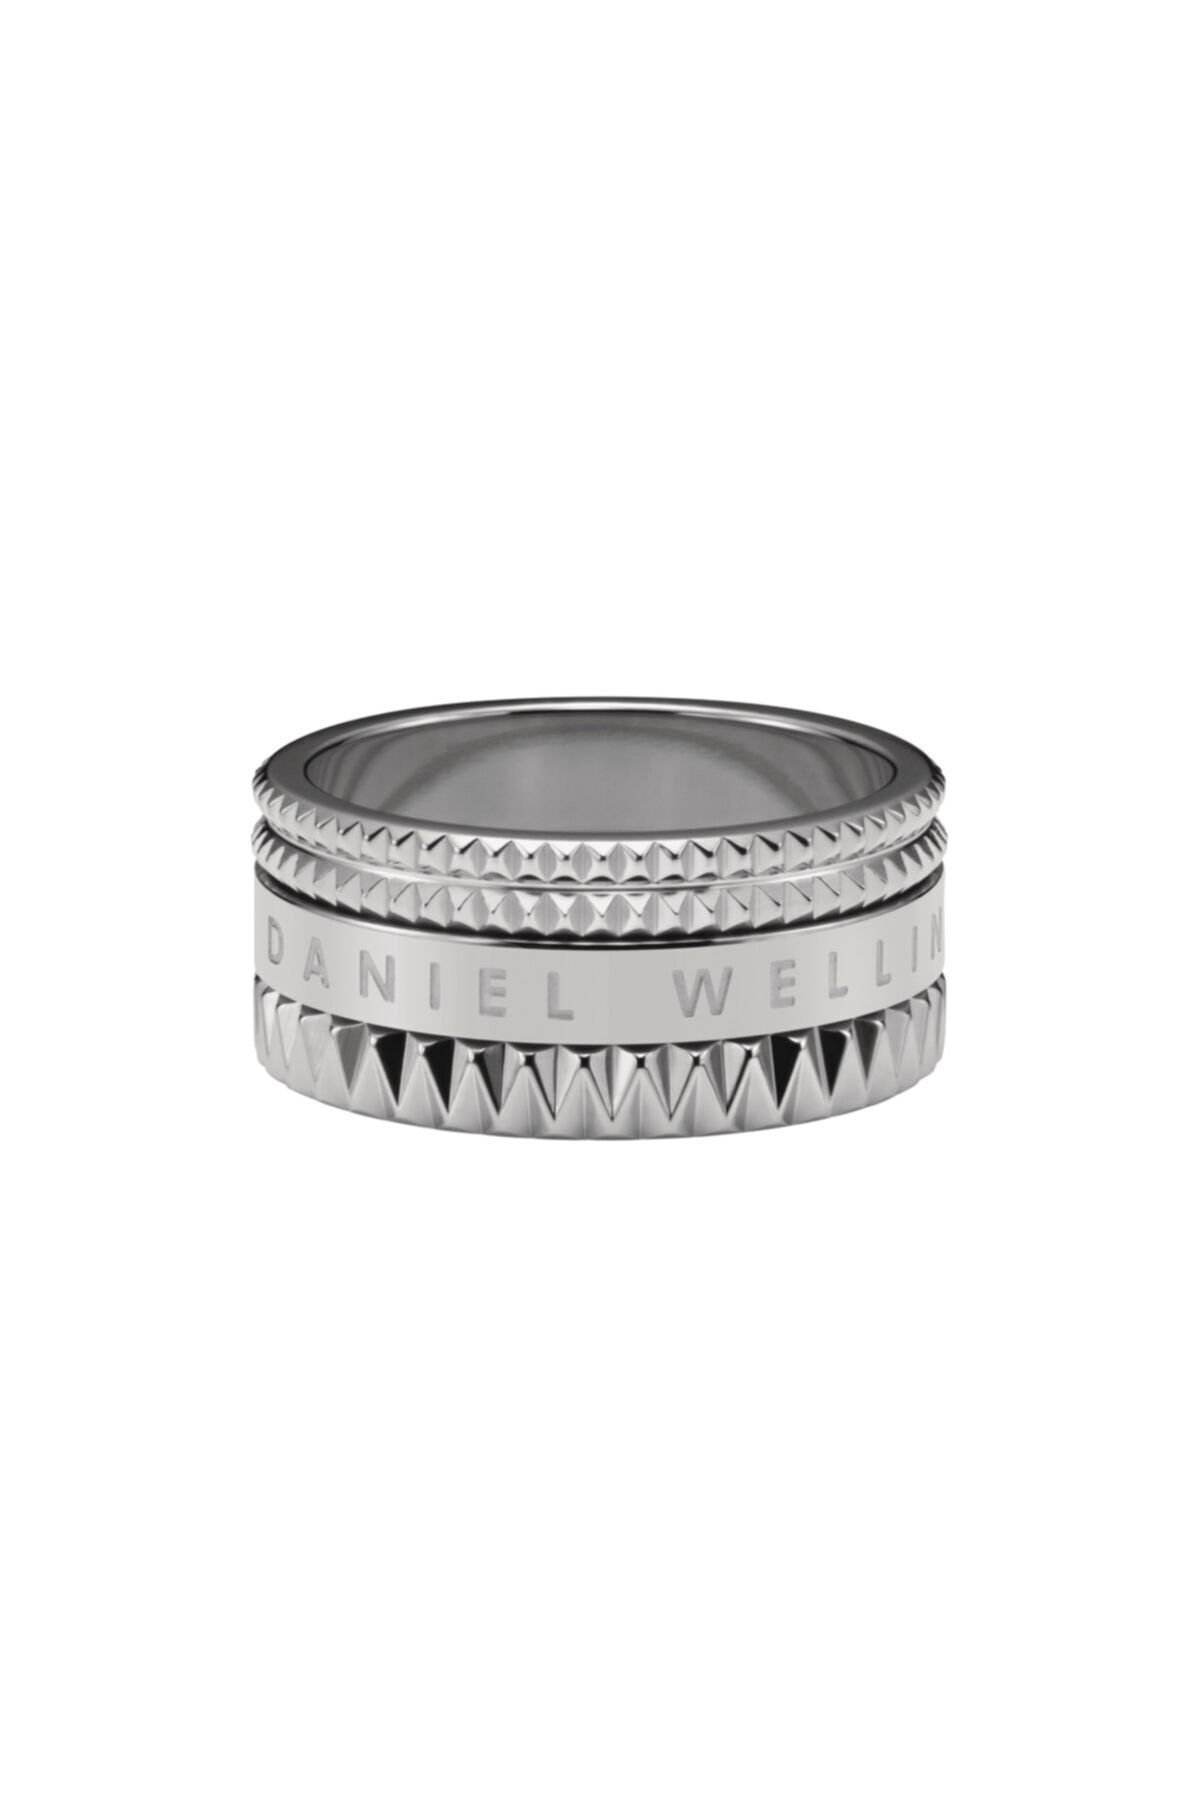 Daniel Wellington Elevation Ring, Silver 50